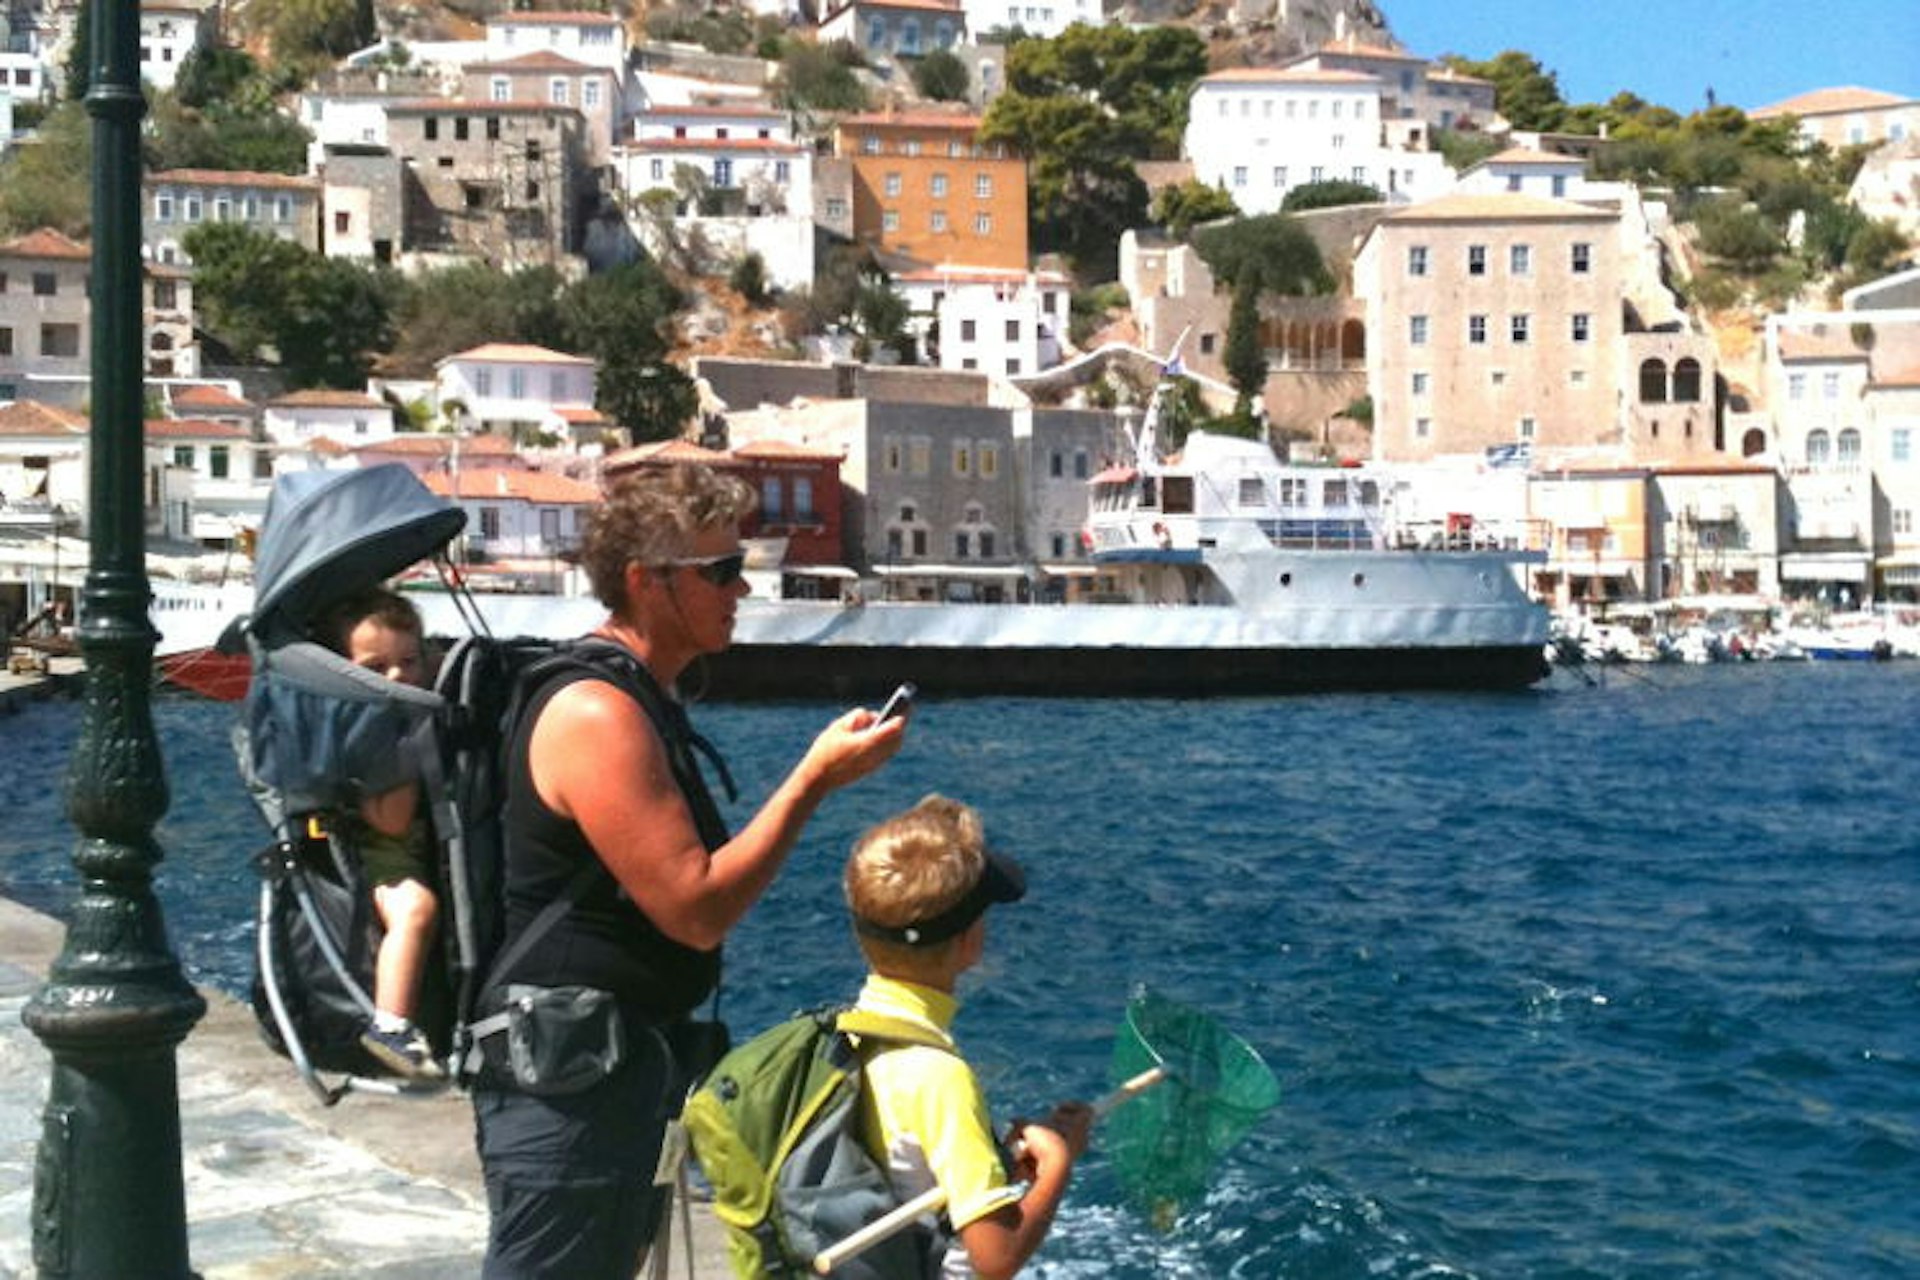 Choosing the day’s Greek adventure: swim, fish, boat ride, walk? 